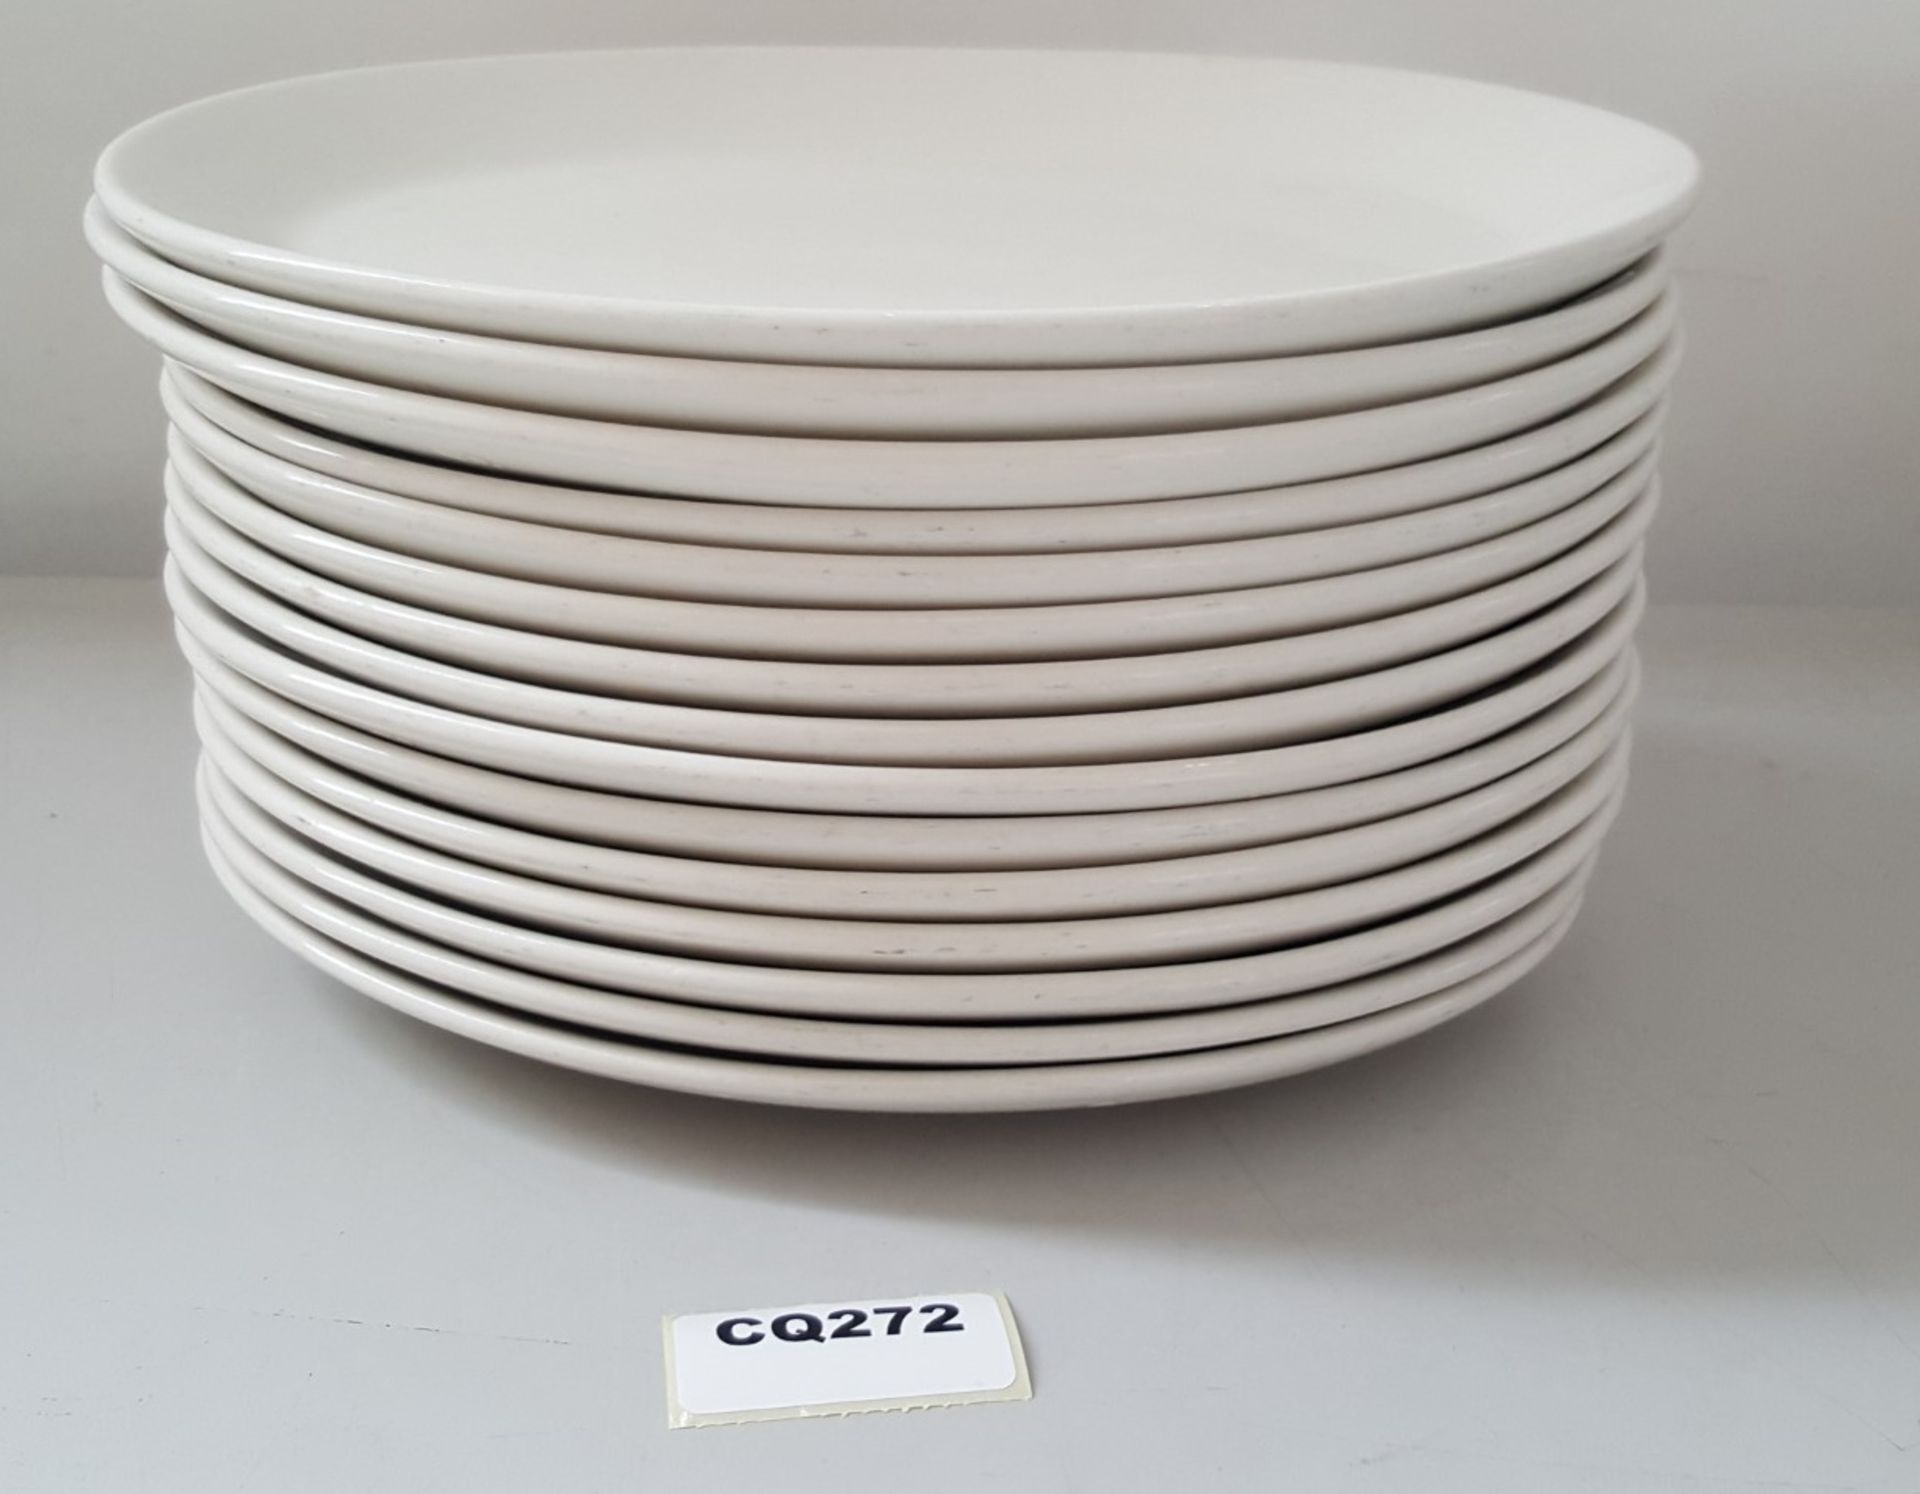 15 x Steelite Oval Serving Plates White L28/W21.5CM - Ref CQ272 - Image 2 of 4